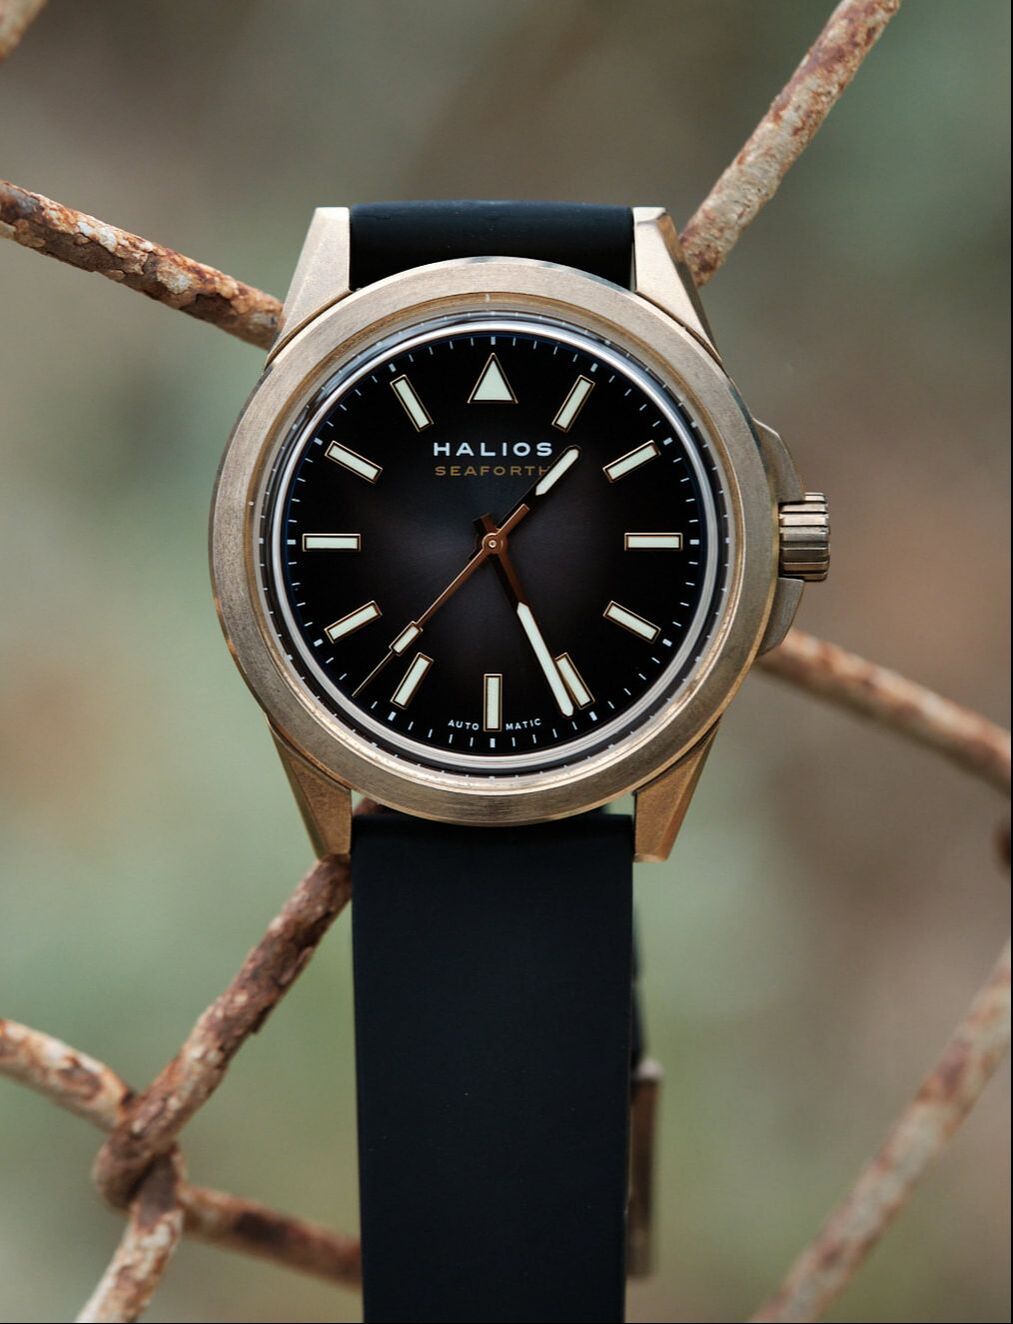 Macro photo of Halios Seaforth Bronze automatic wrist watch